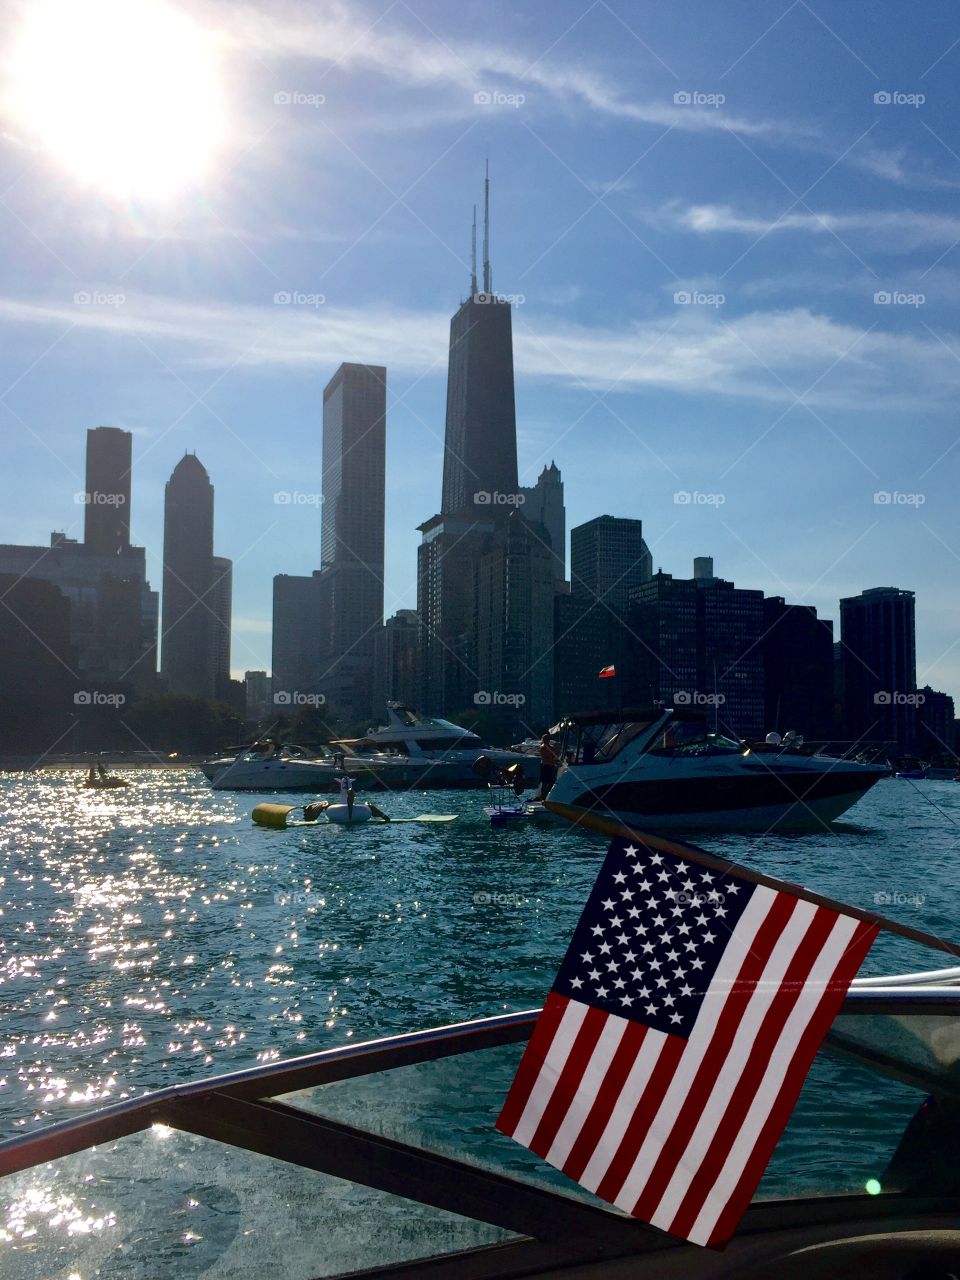 Chicago - United States of America